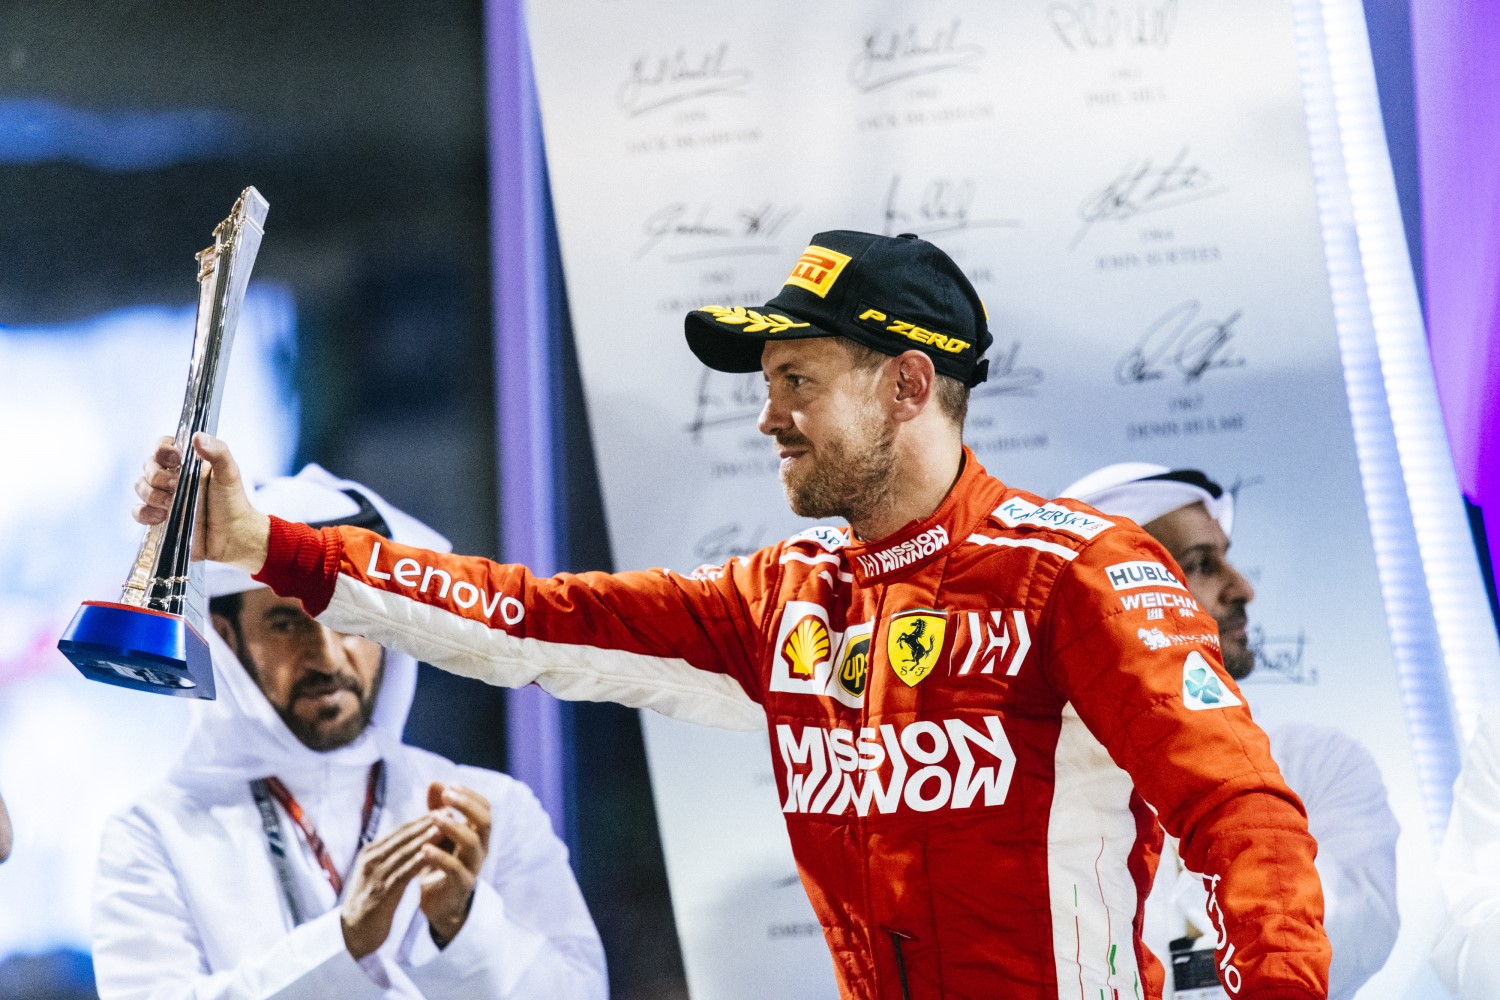 Vettel on the podium